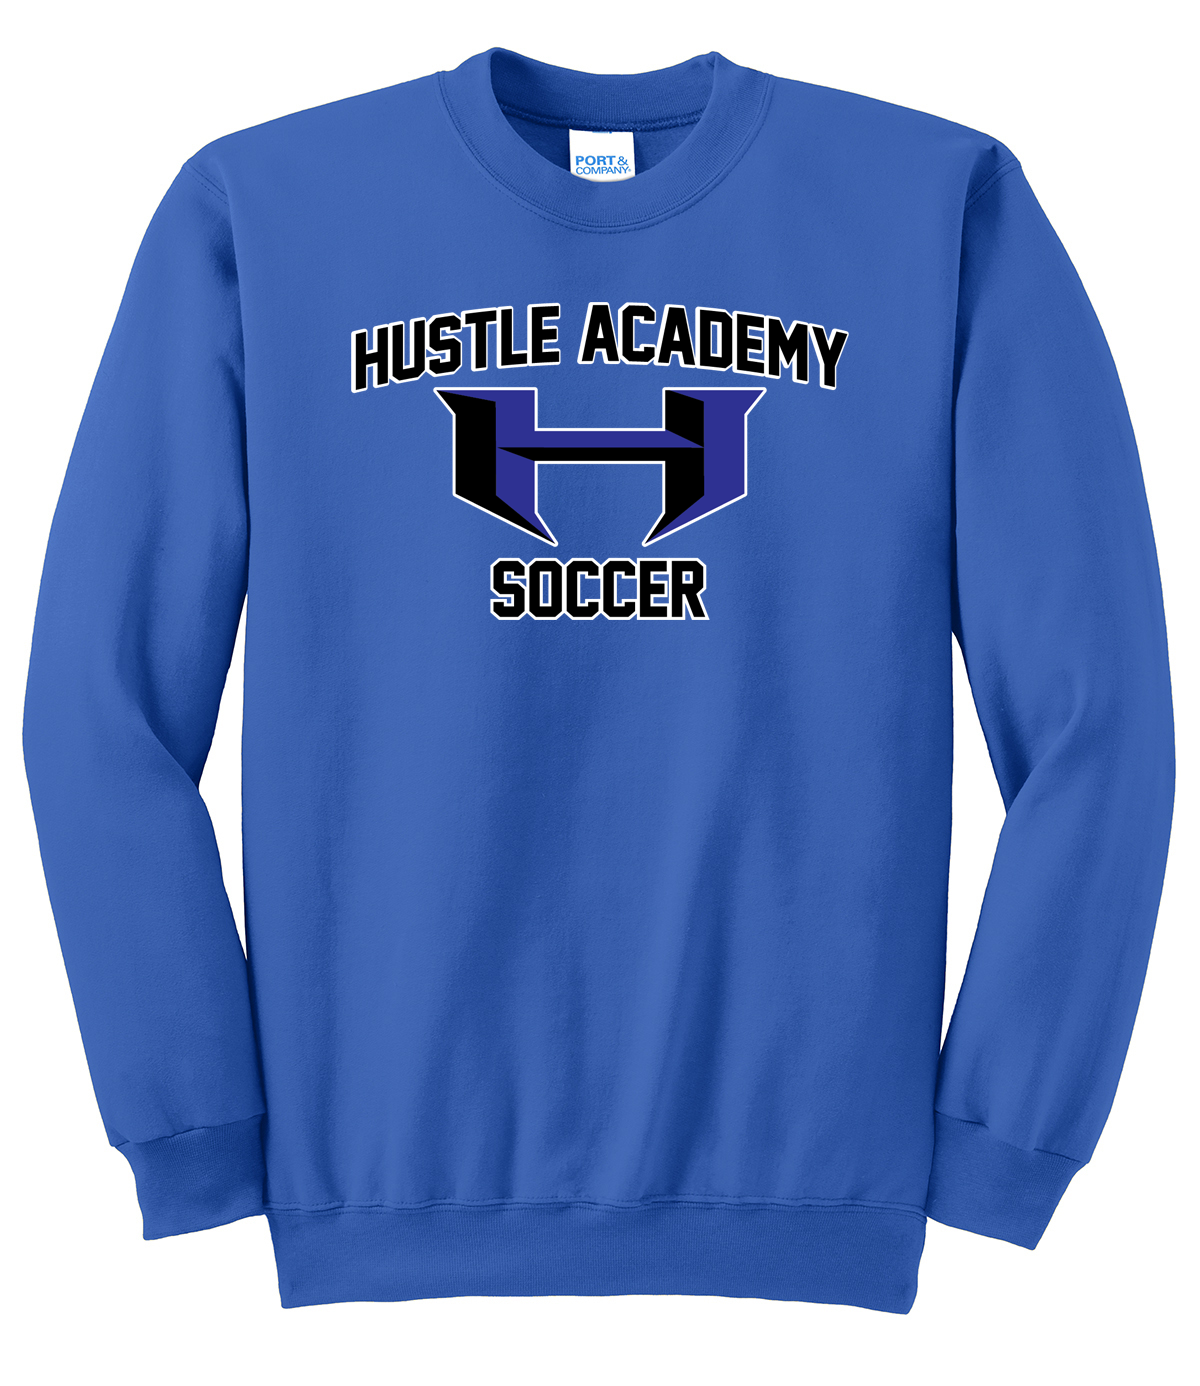 Hustle Academy Soccer Crew Neck Sweater